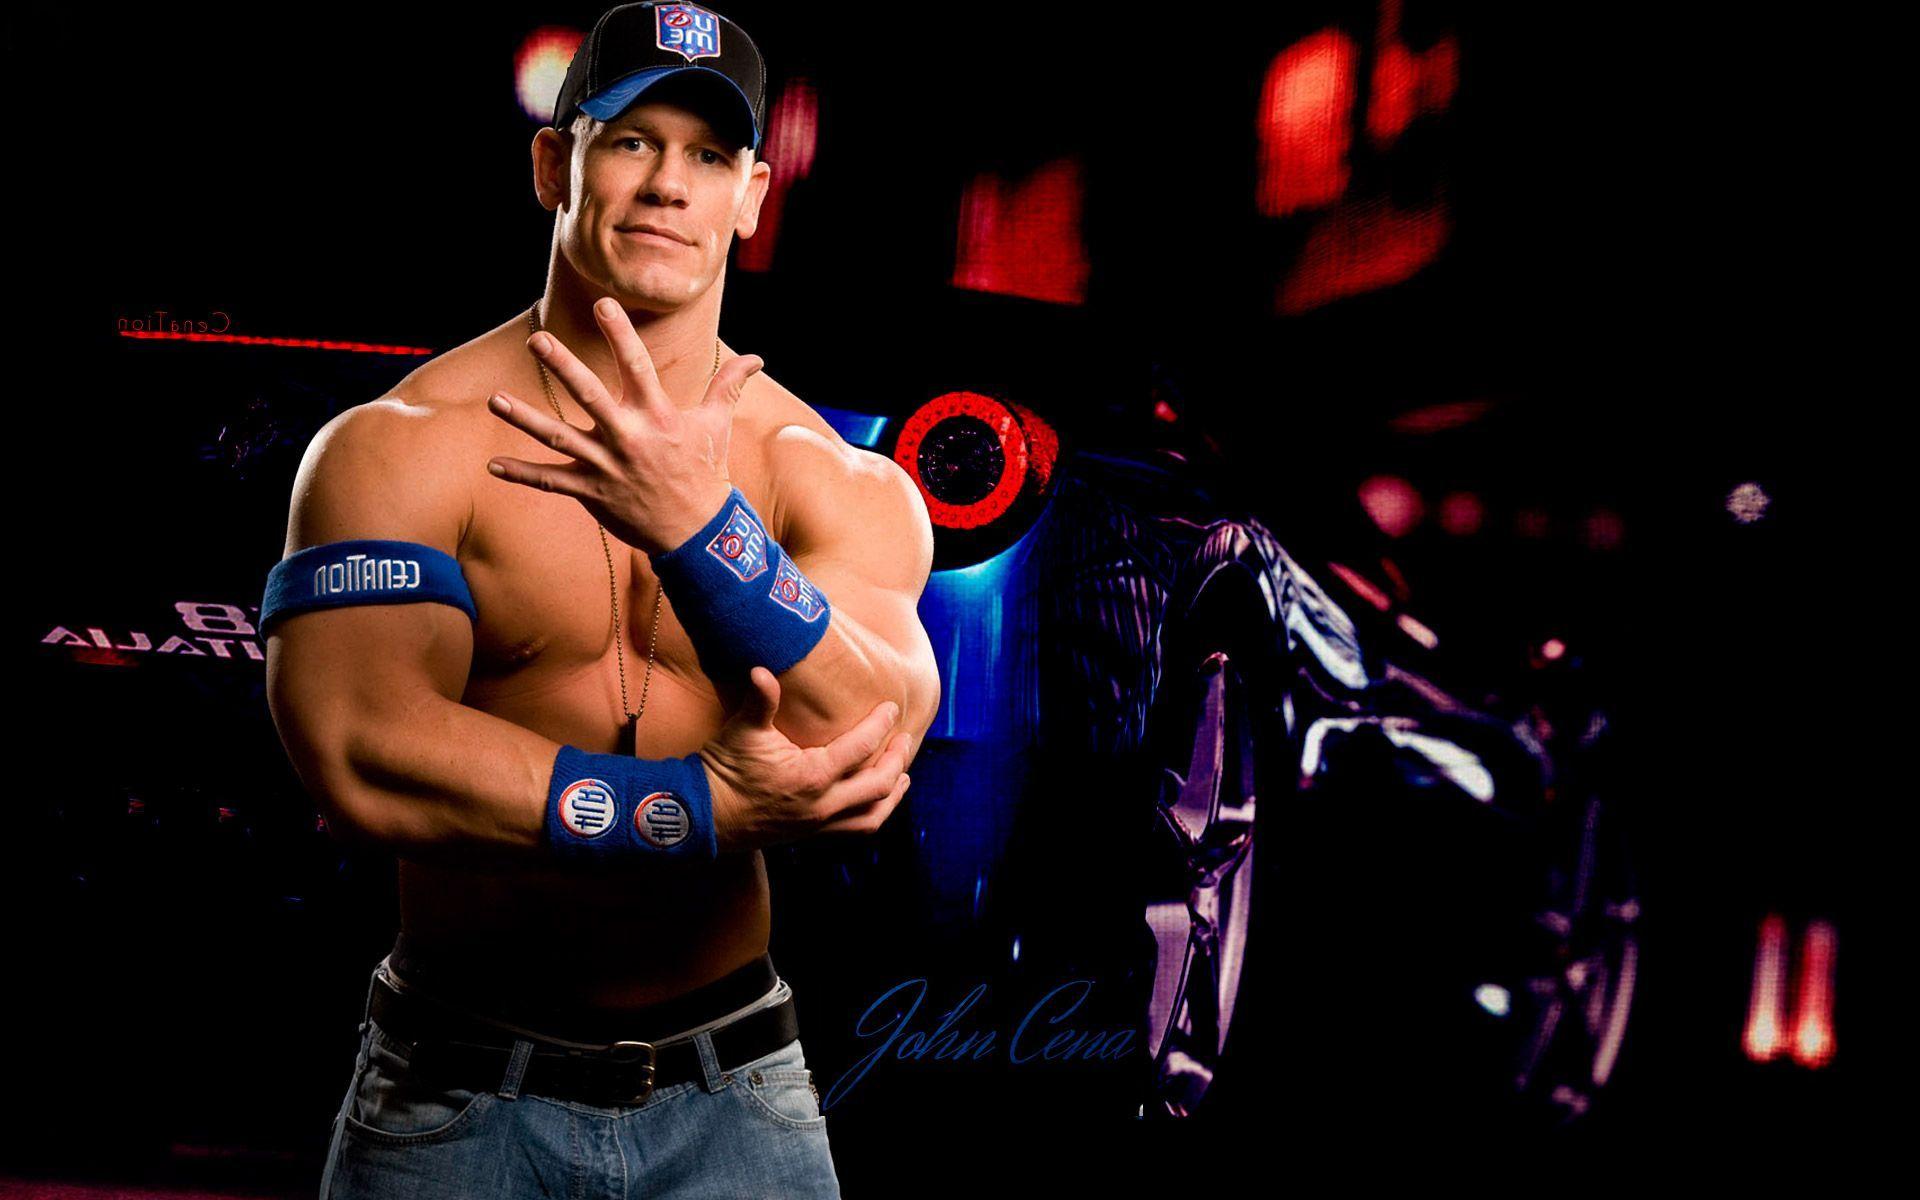 WWE John Cena HD Wallpaper 1080p For Desktop Your Star